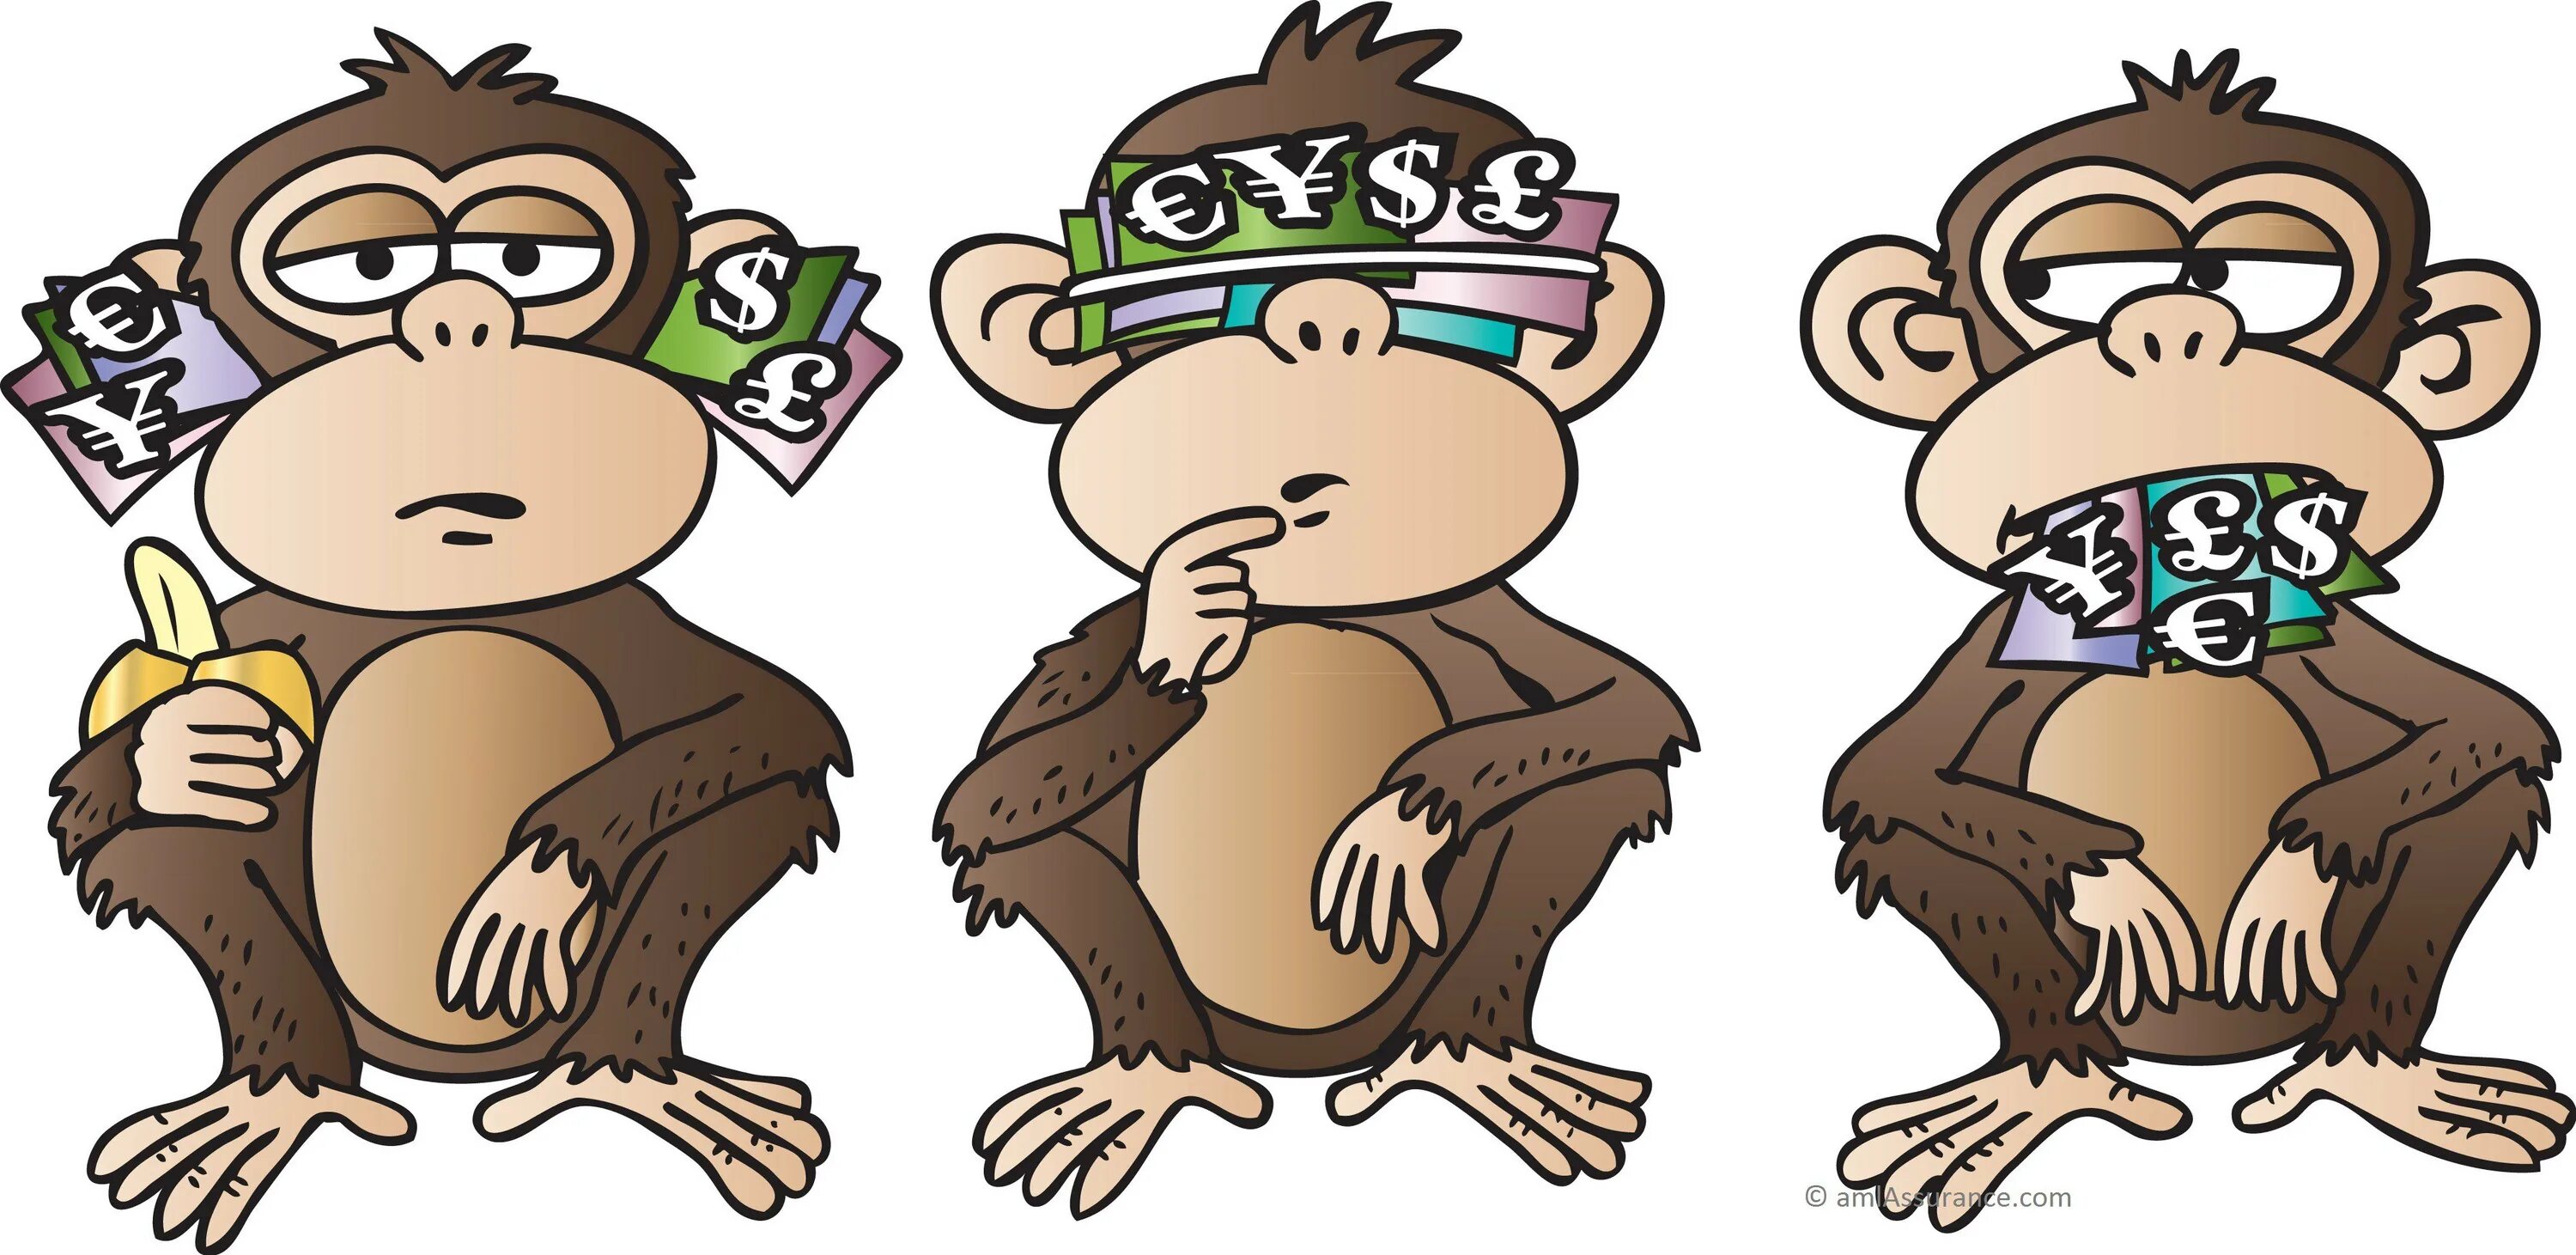 Три обезьяны. Три обезьянки. Обезьяны не слышу не вижу. Обезьяна с деньгами.